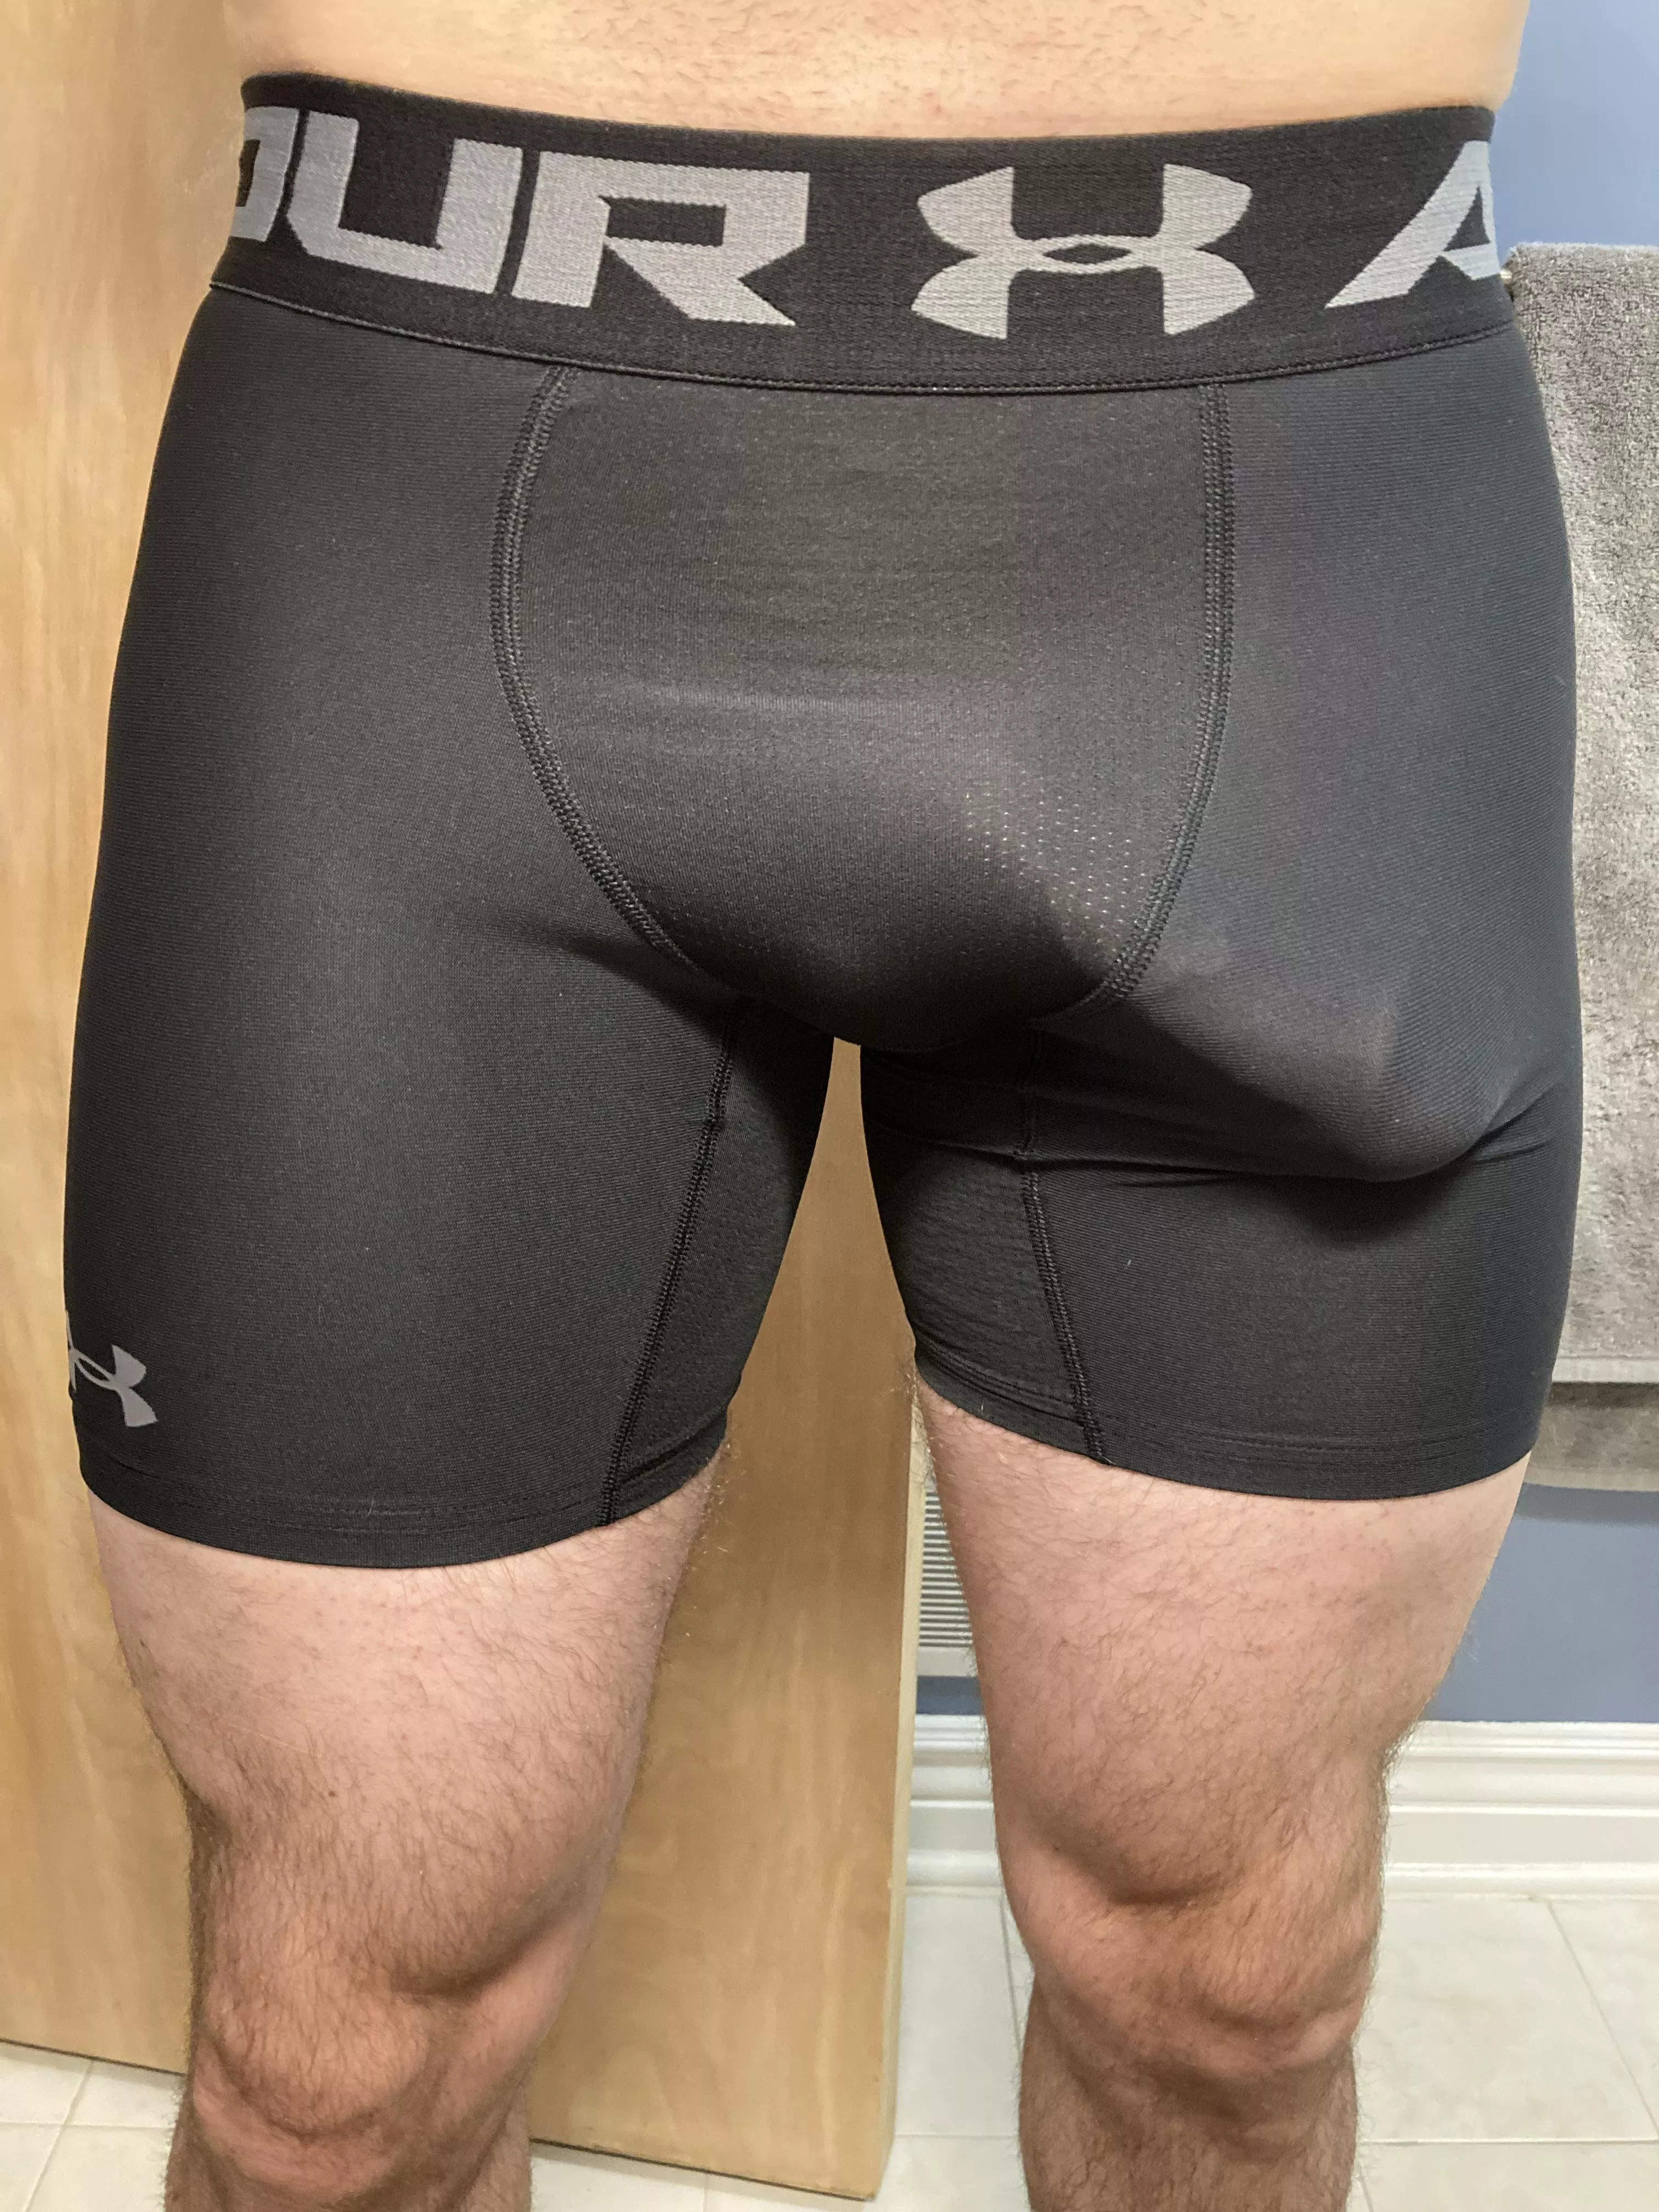 Bulging Boner In White Compression Shorts